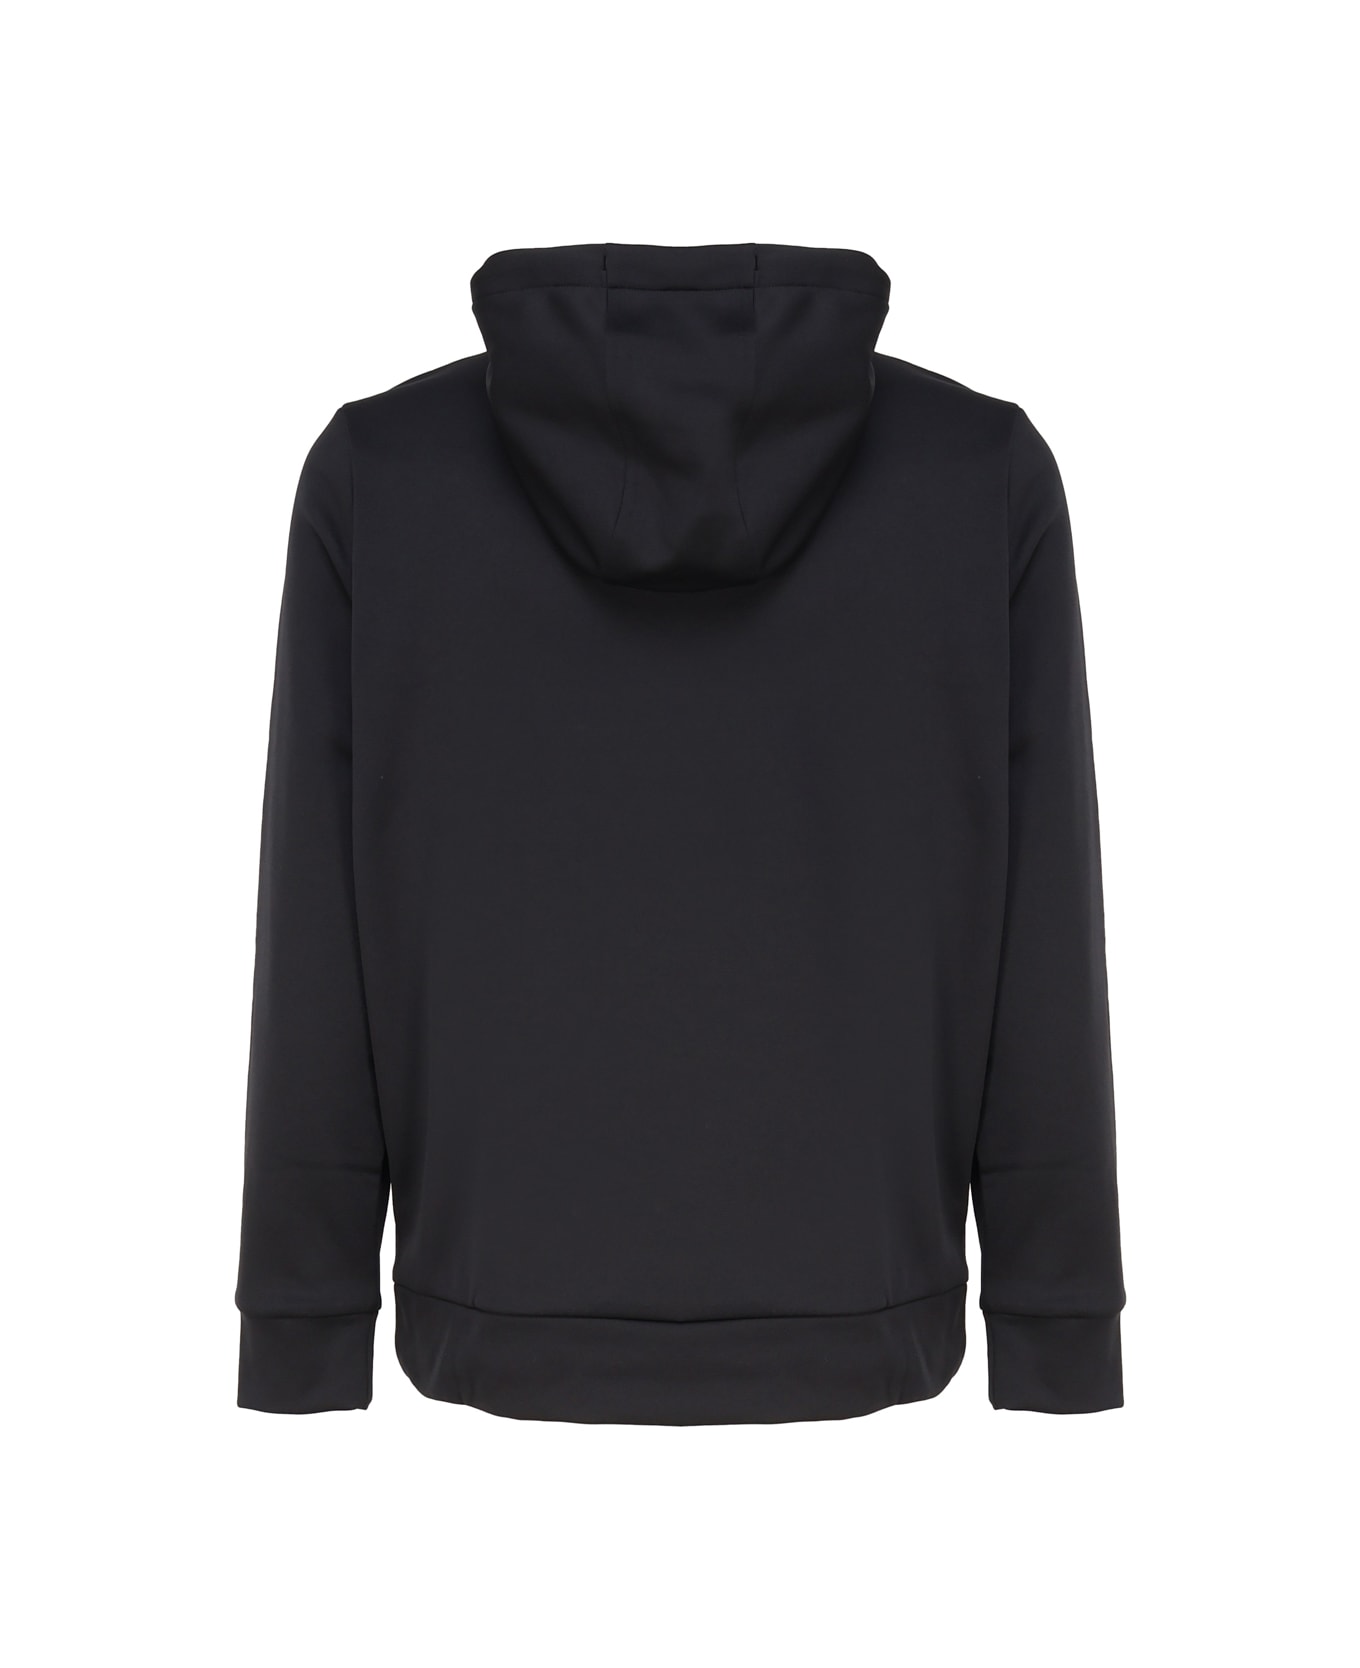 Under Armour Cotton Sweatshirt With Fleece Fabric - Black